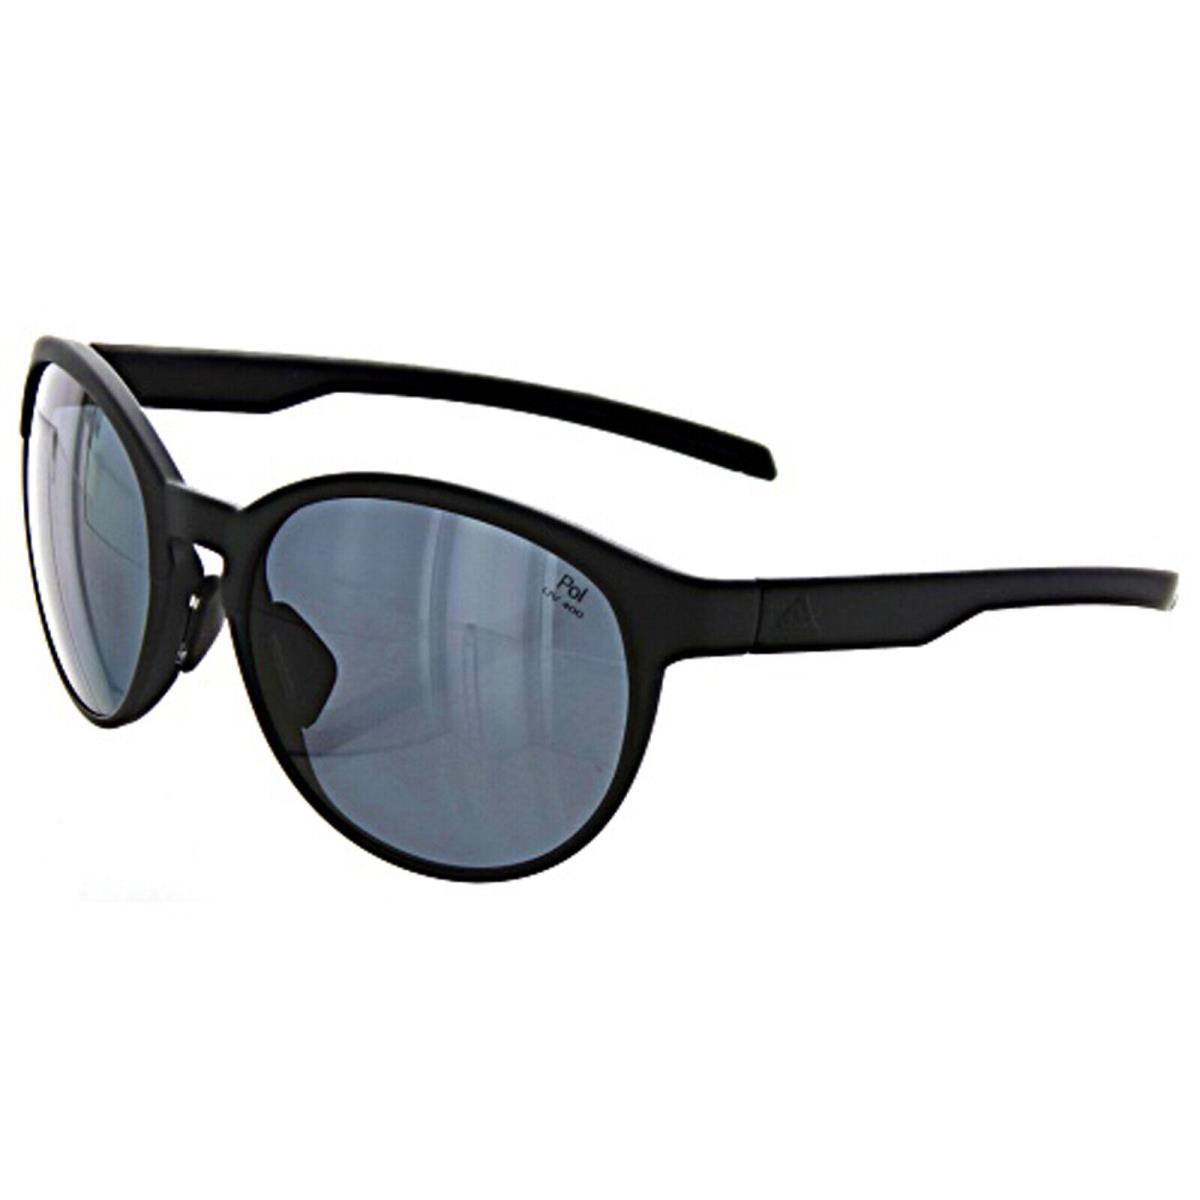 Adidas Beyonder Matte Black/grey Sunglasses - MHS406